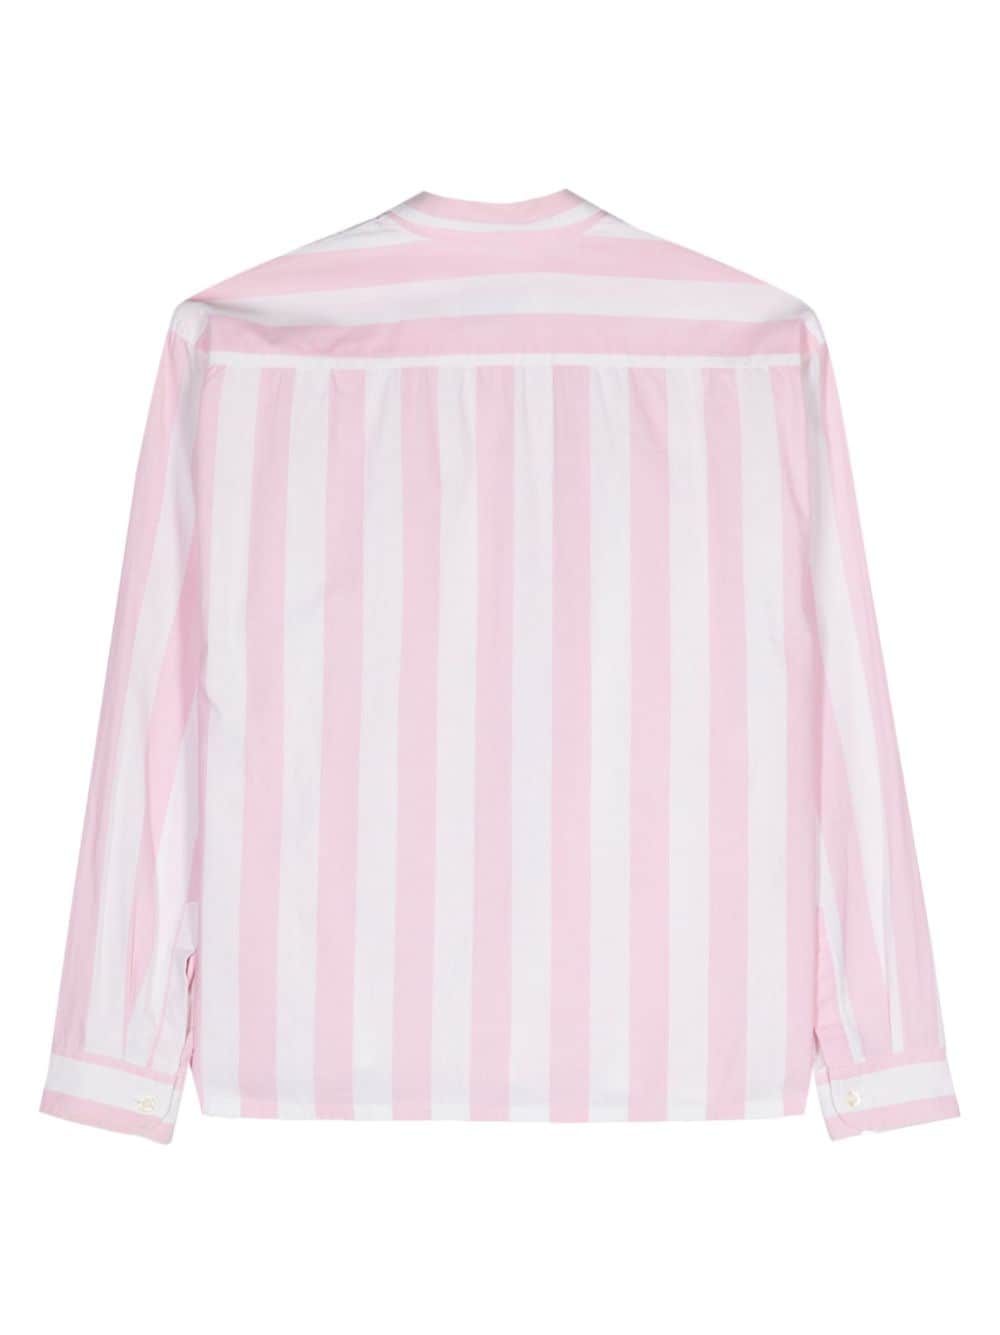 Valentino Garavani Pre-Owned 1980s gestreepte blouse - Roze